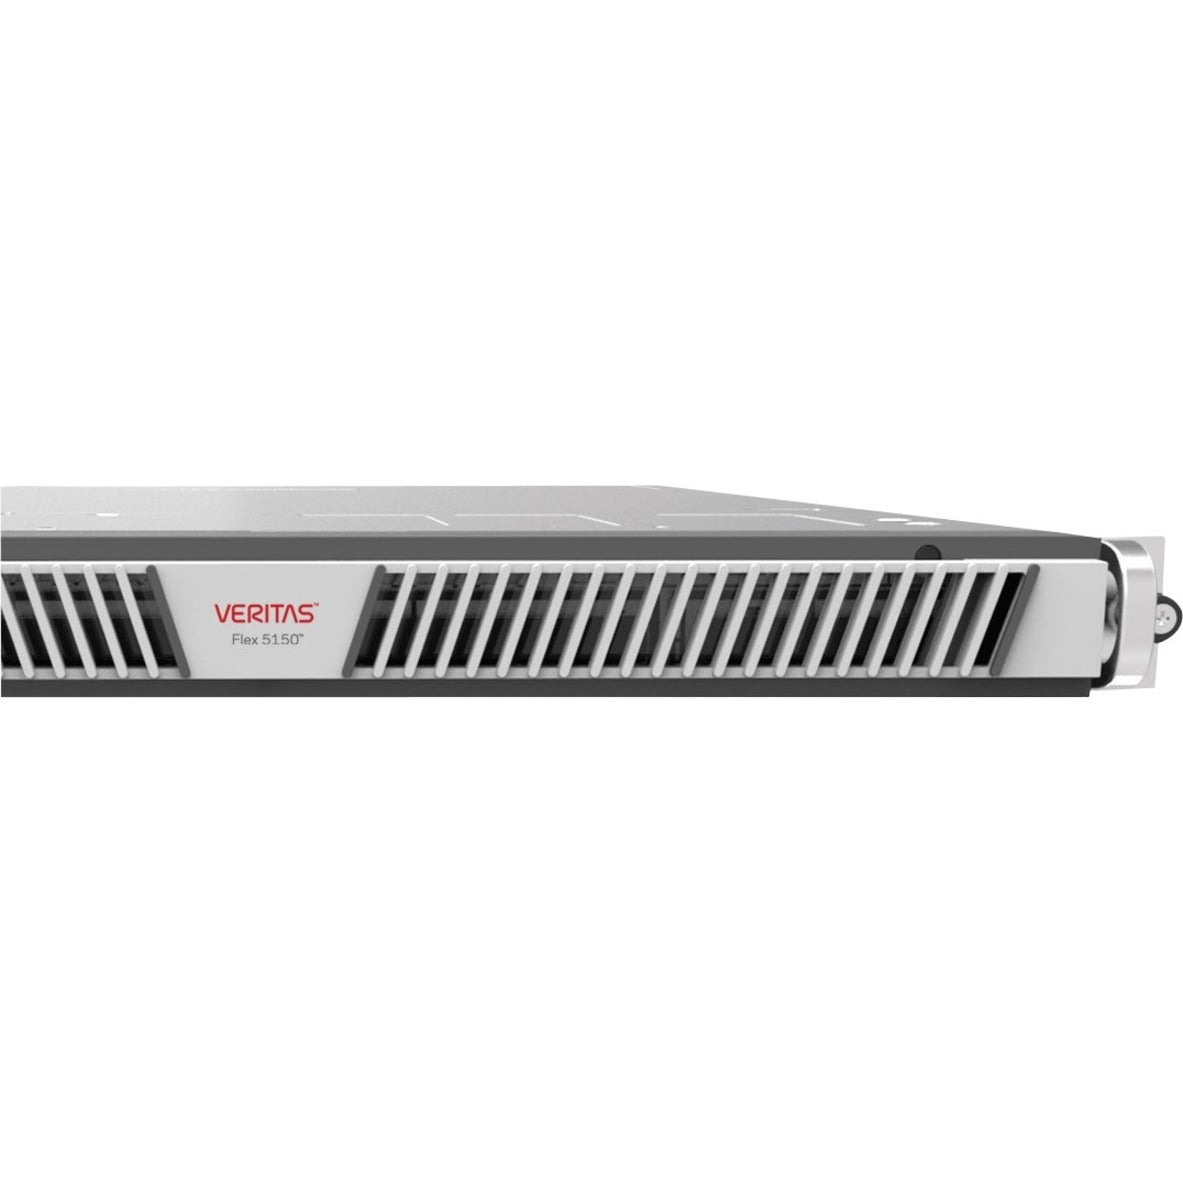 Veritas 26116-M0010 Flex System 5150 NAS Storage System, 15TB Total Hard Drive Capacity Installed, 12Gb/s SAS Controller, 6 Network (RJ-45) Ports